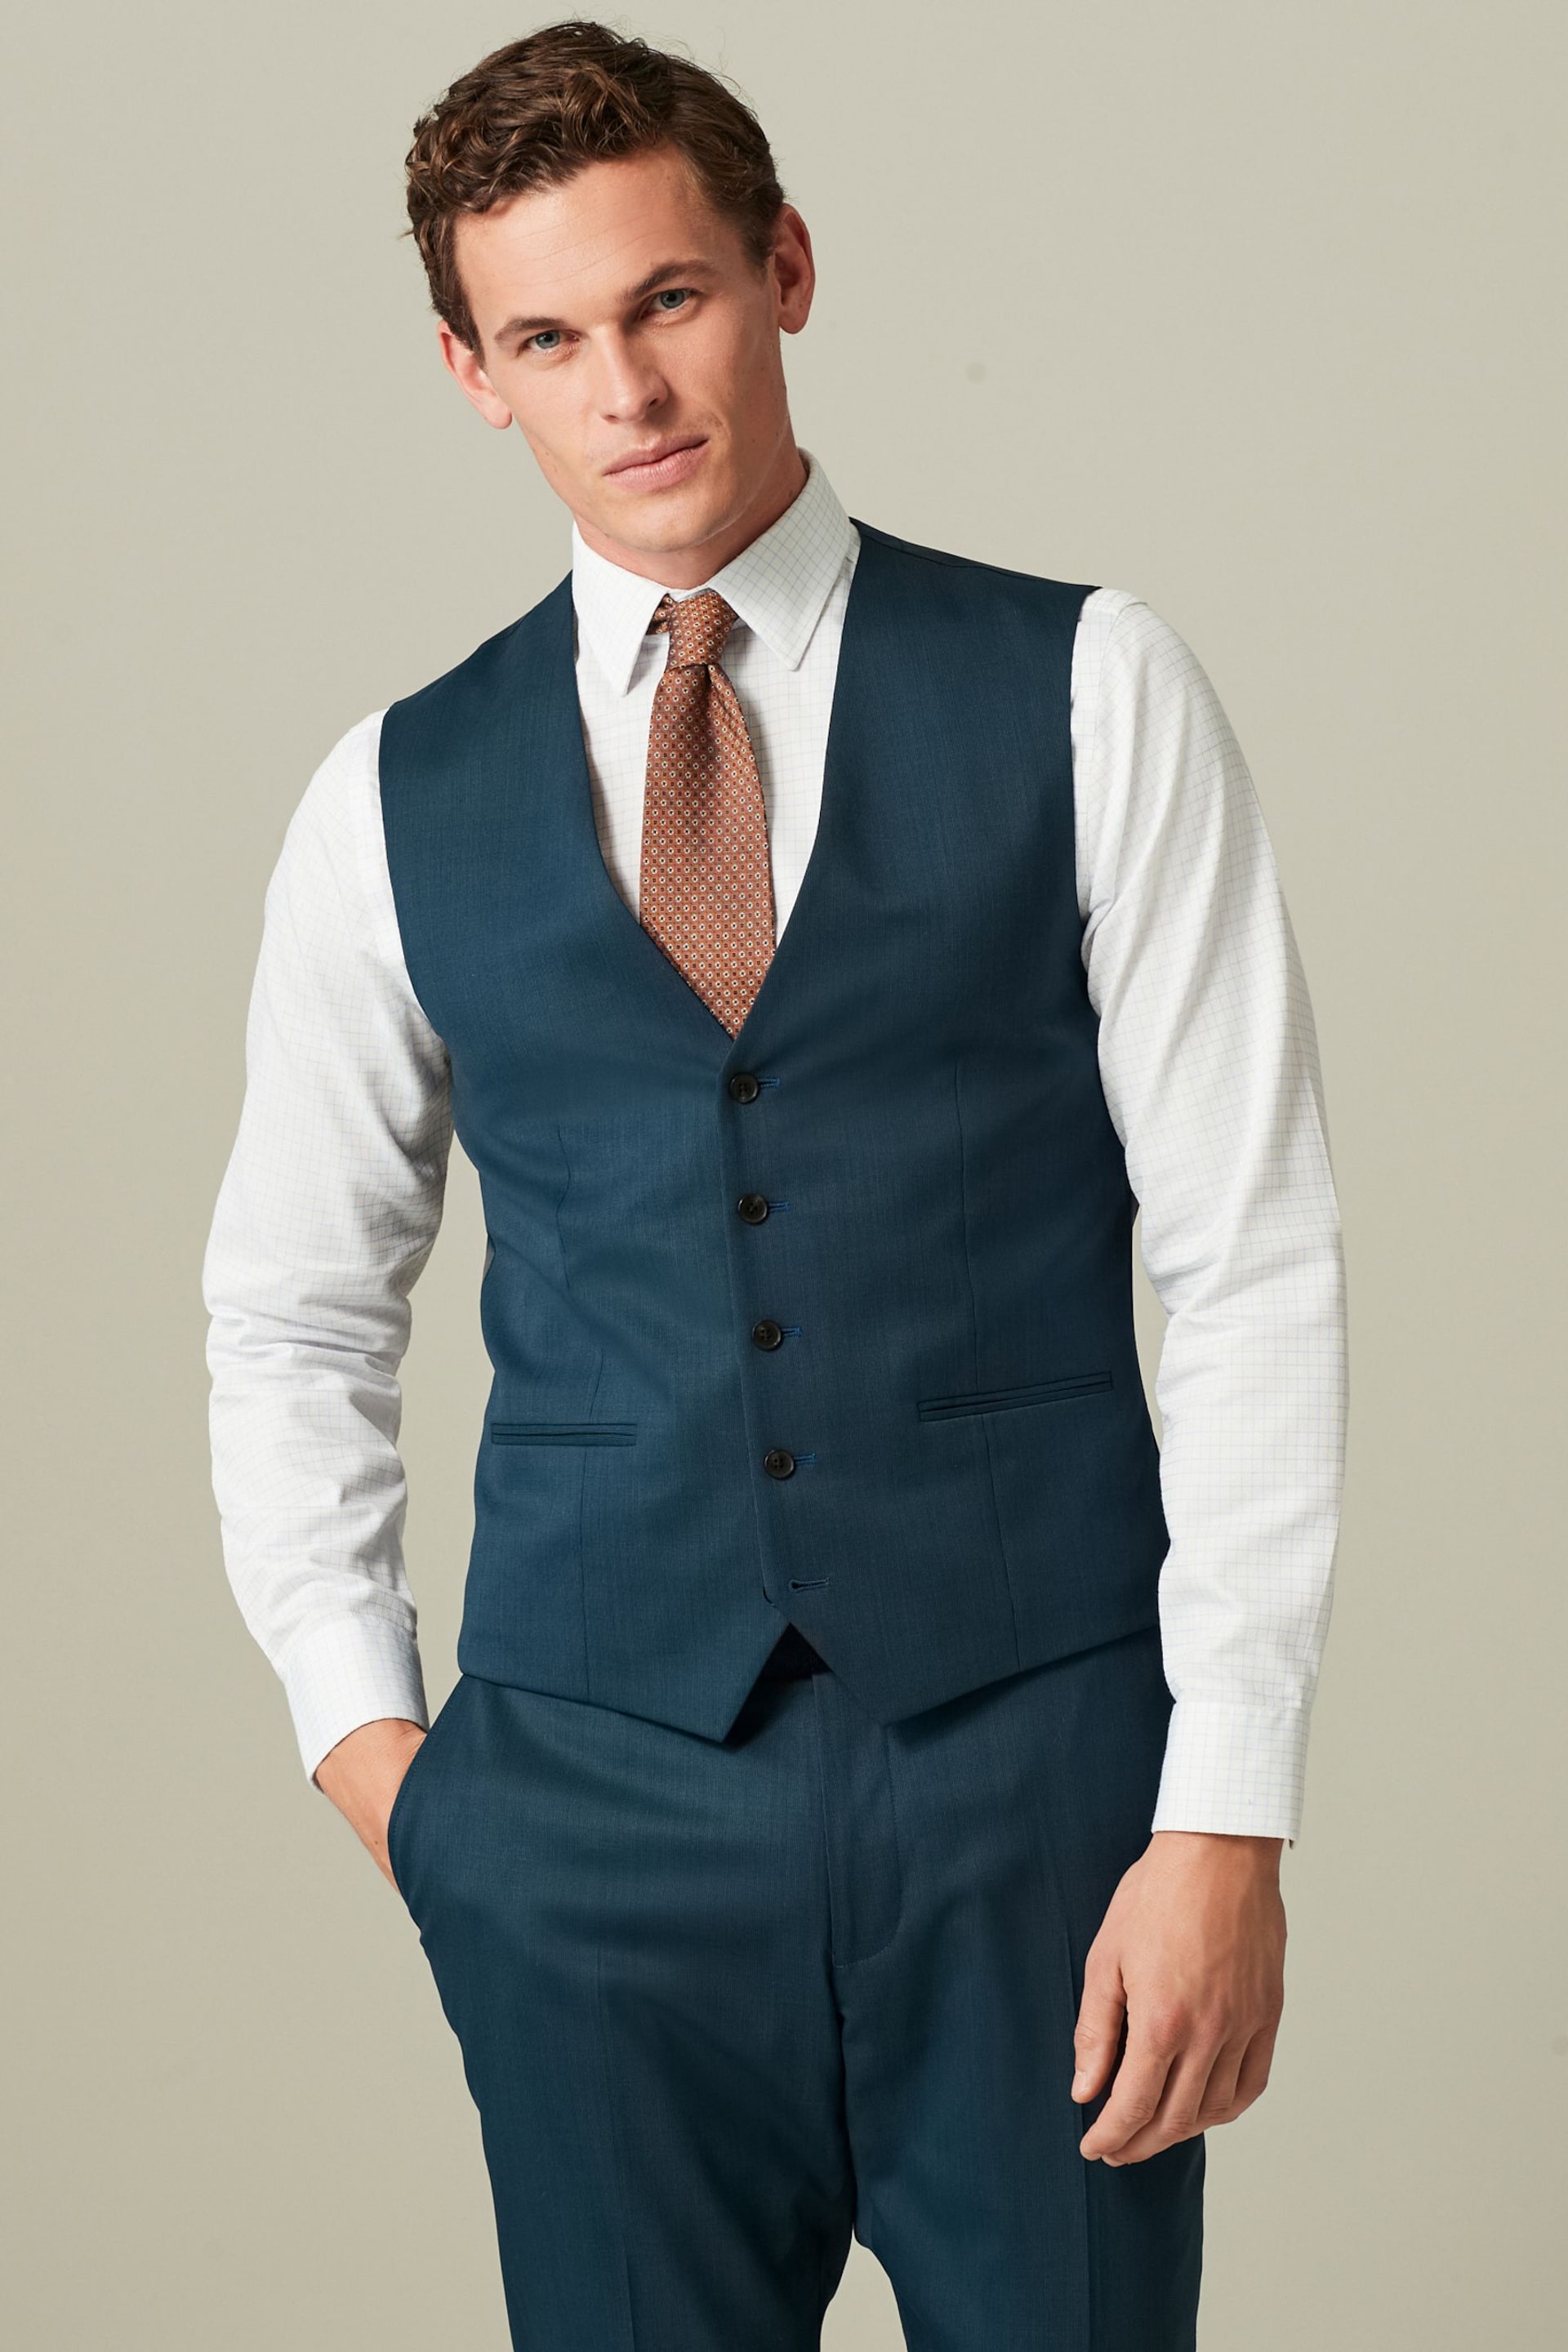 Teal Blue Wool Blend Suit Waistcoat - Image 1 of 10